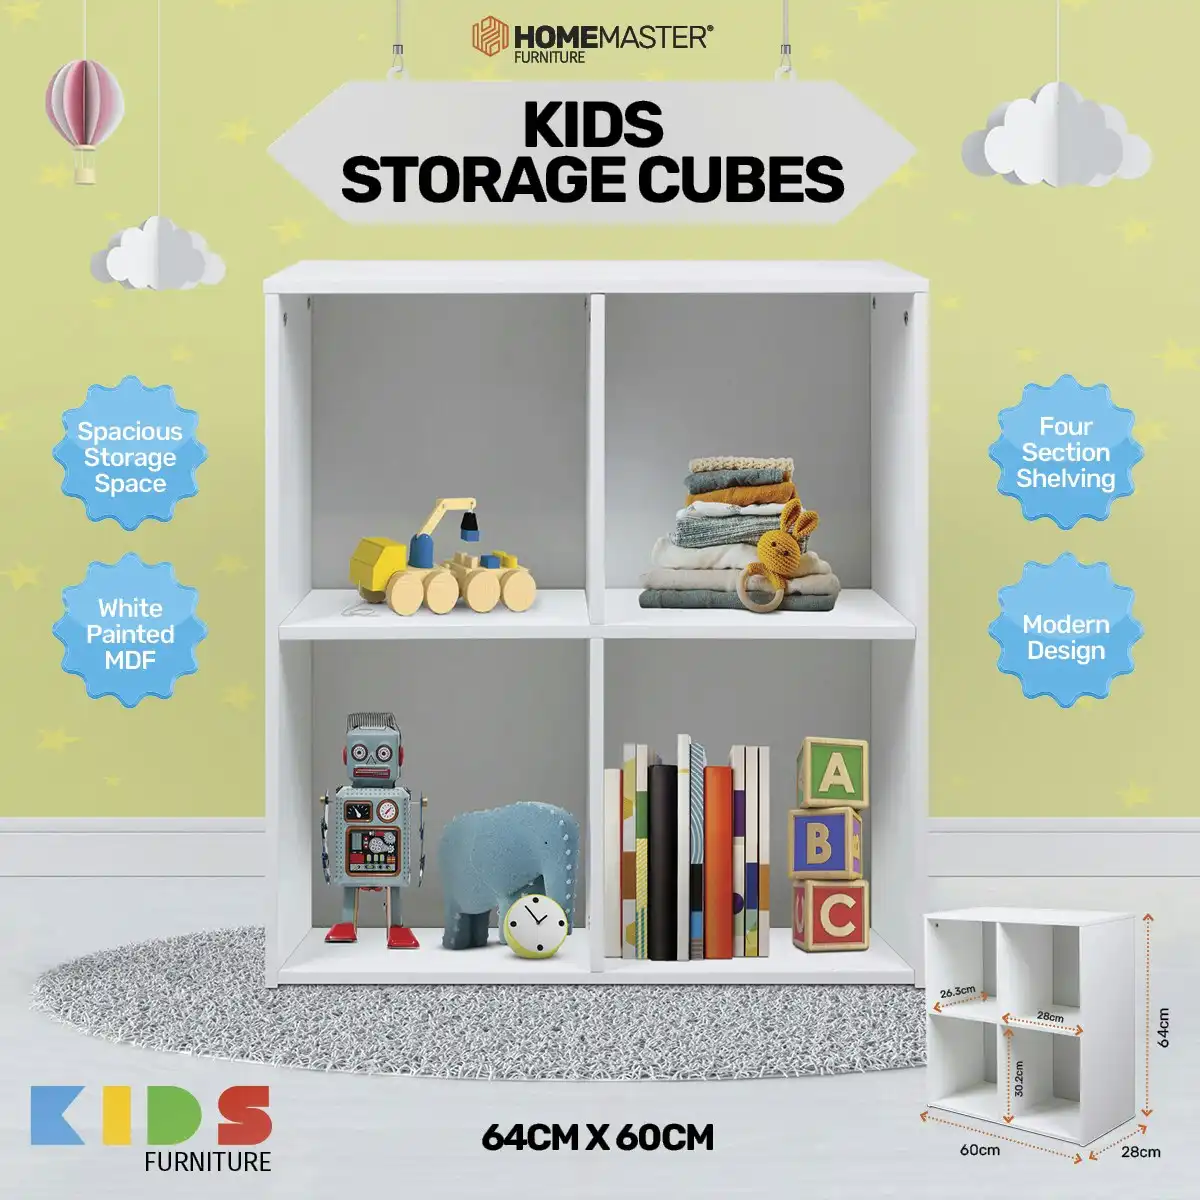 Home Master Kids 4 Section Storage Cubes Spacious Stylish Design 60 x 64cm